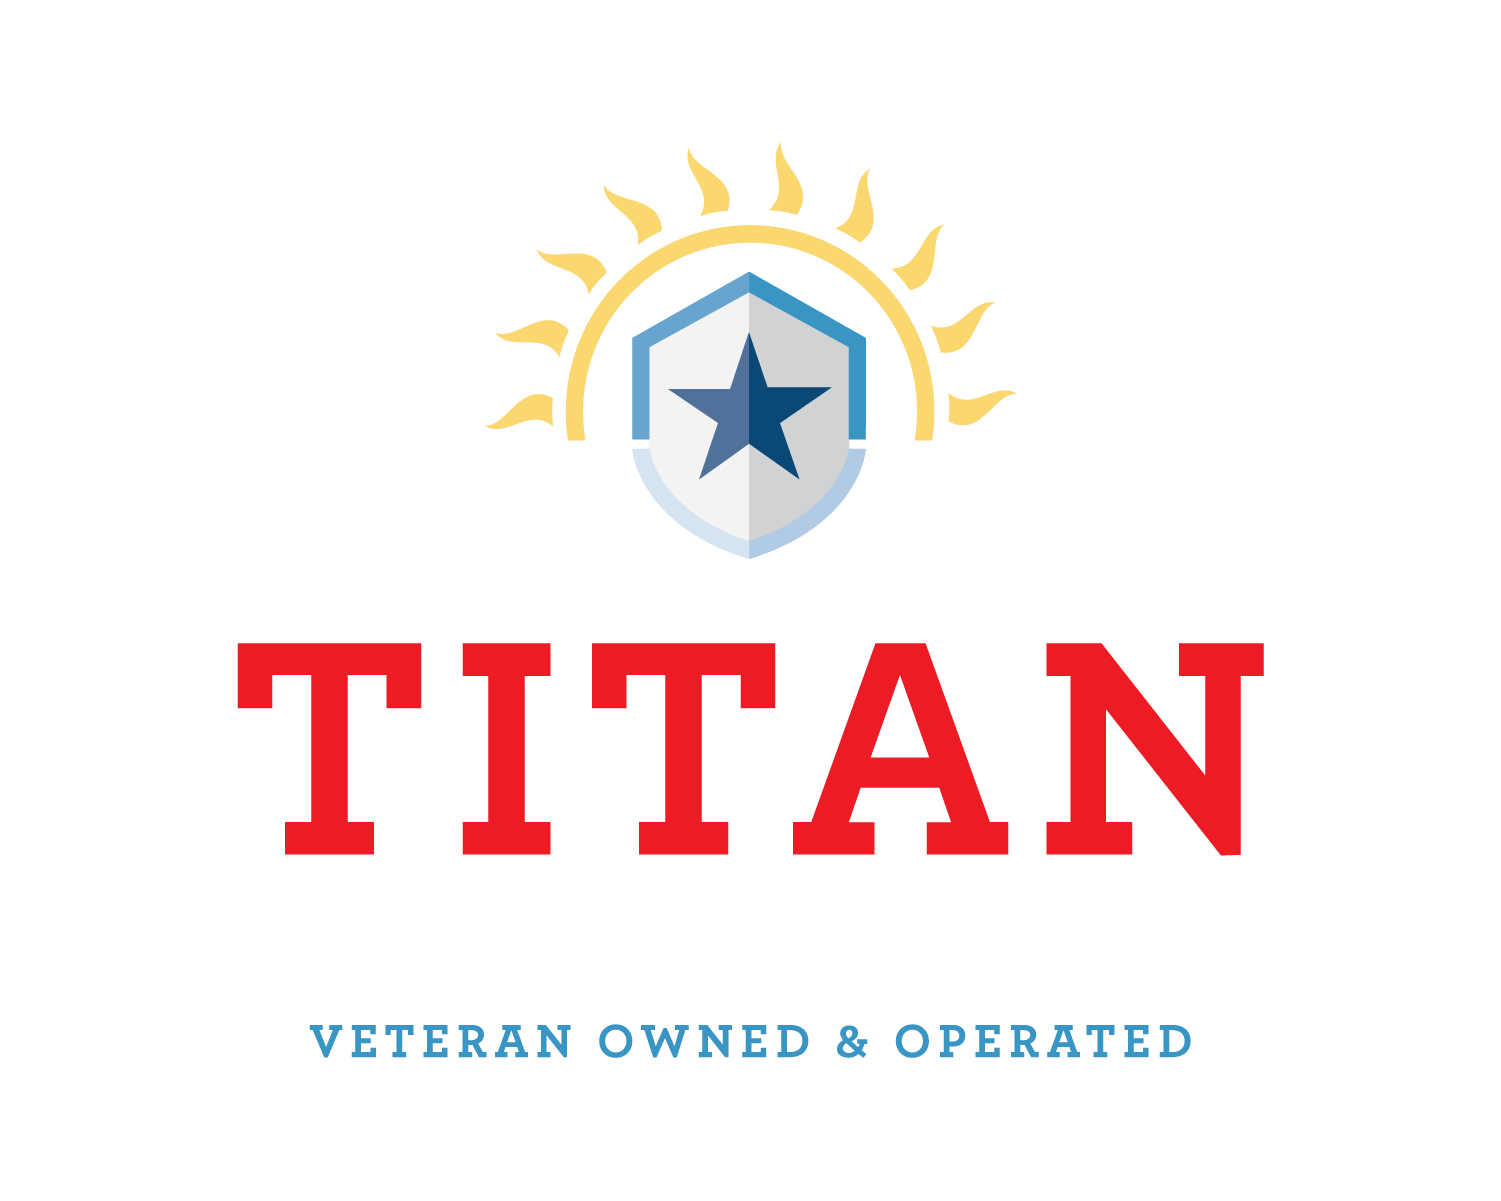 Titan Roofing & Exteriors